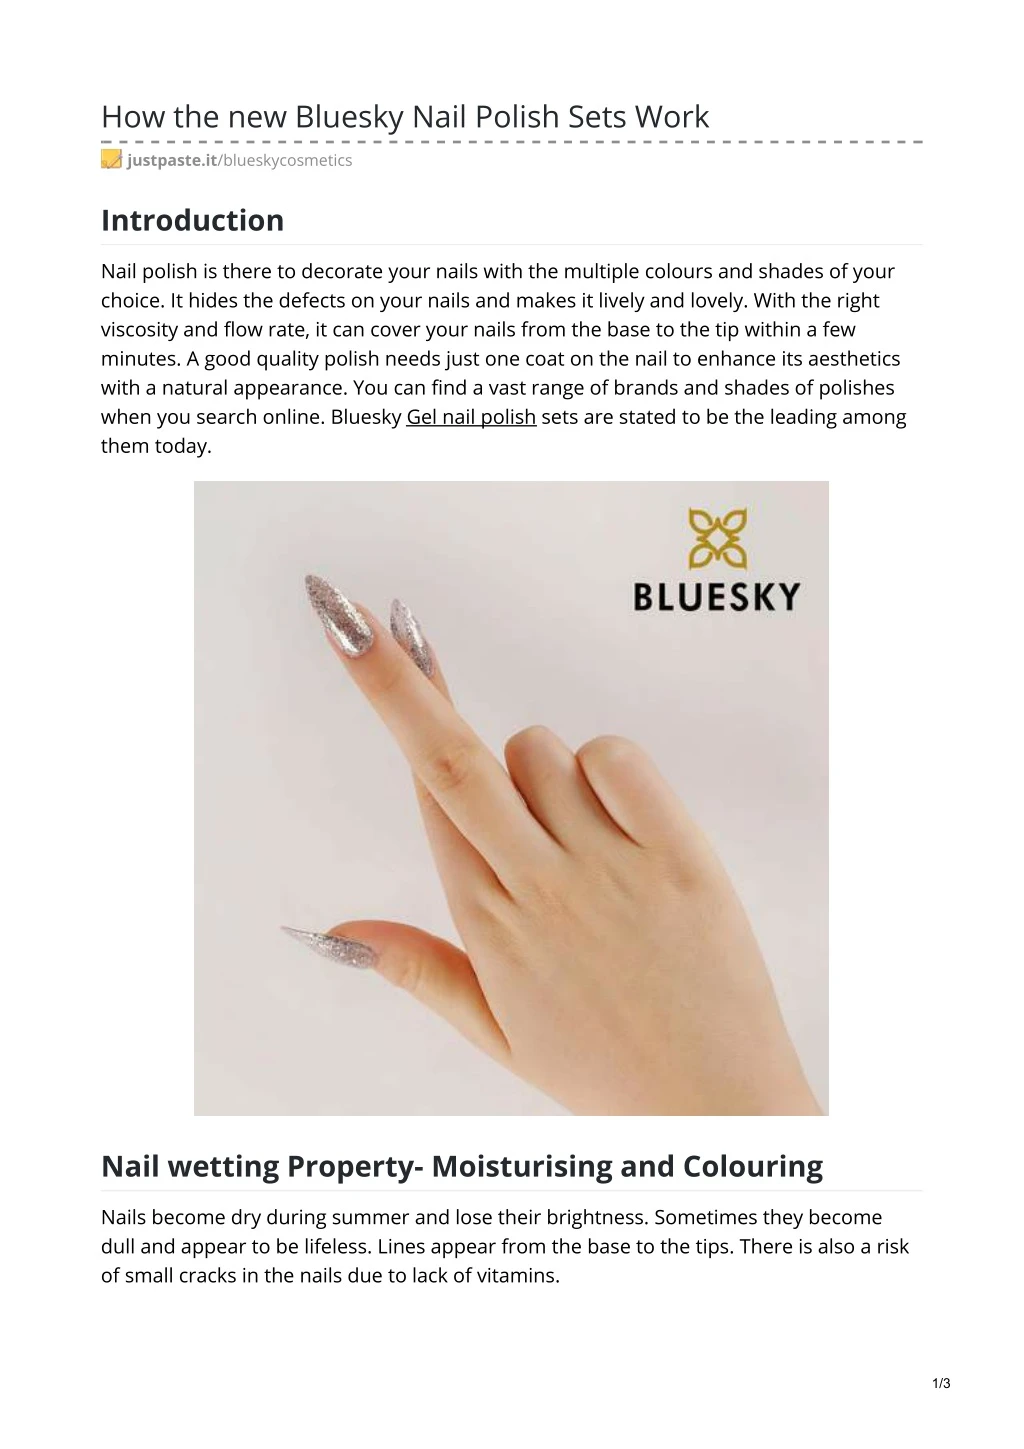 how the new bluesky nail polish sets work